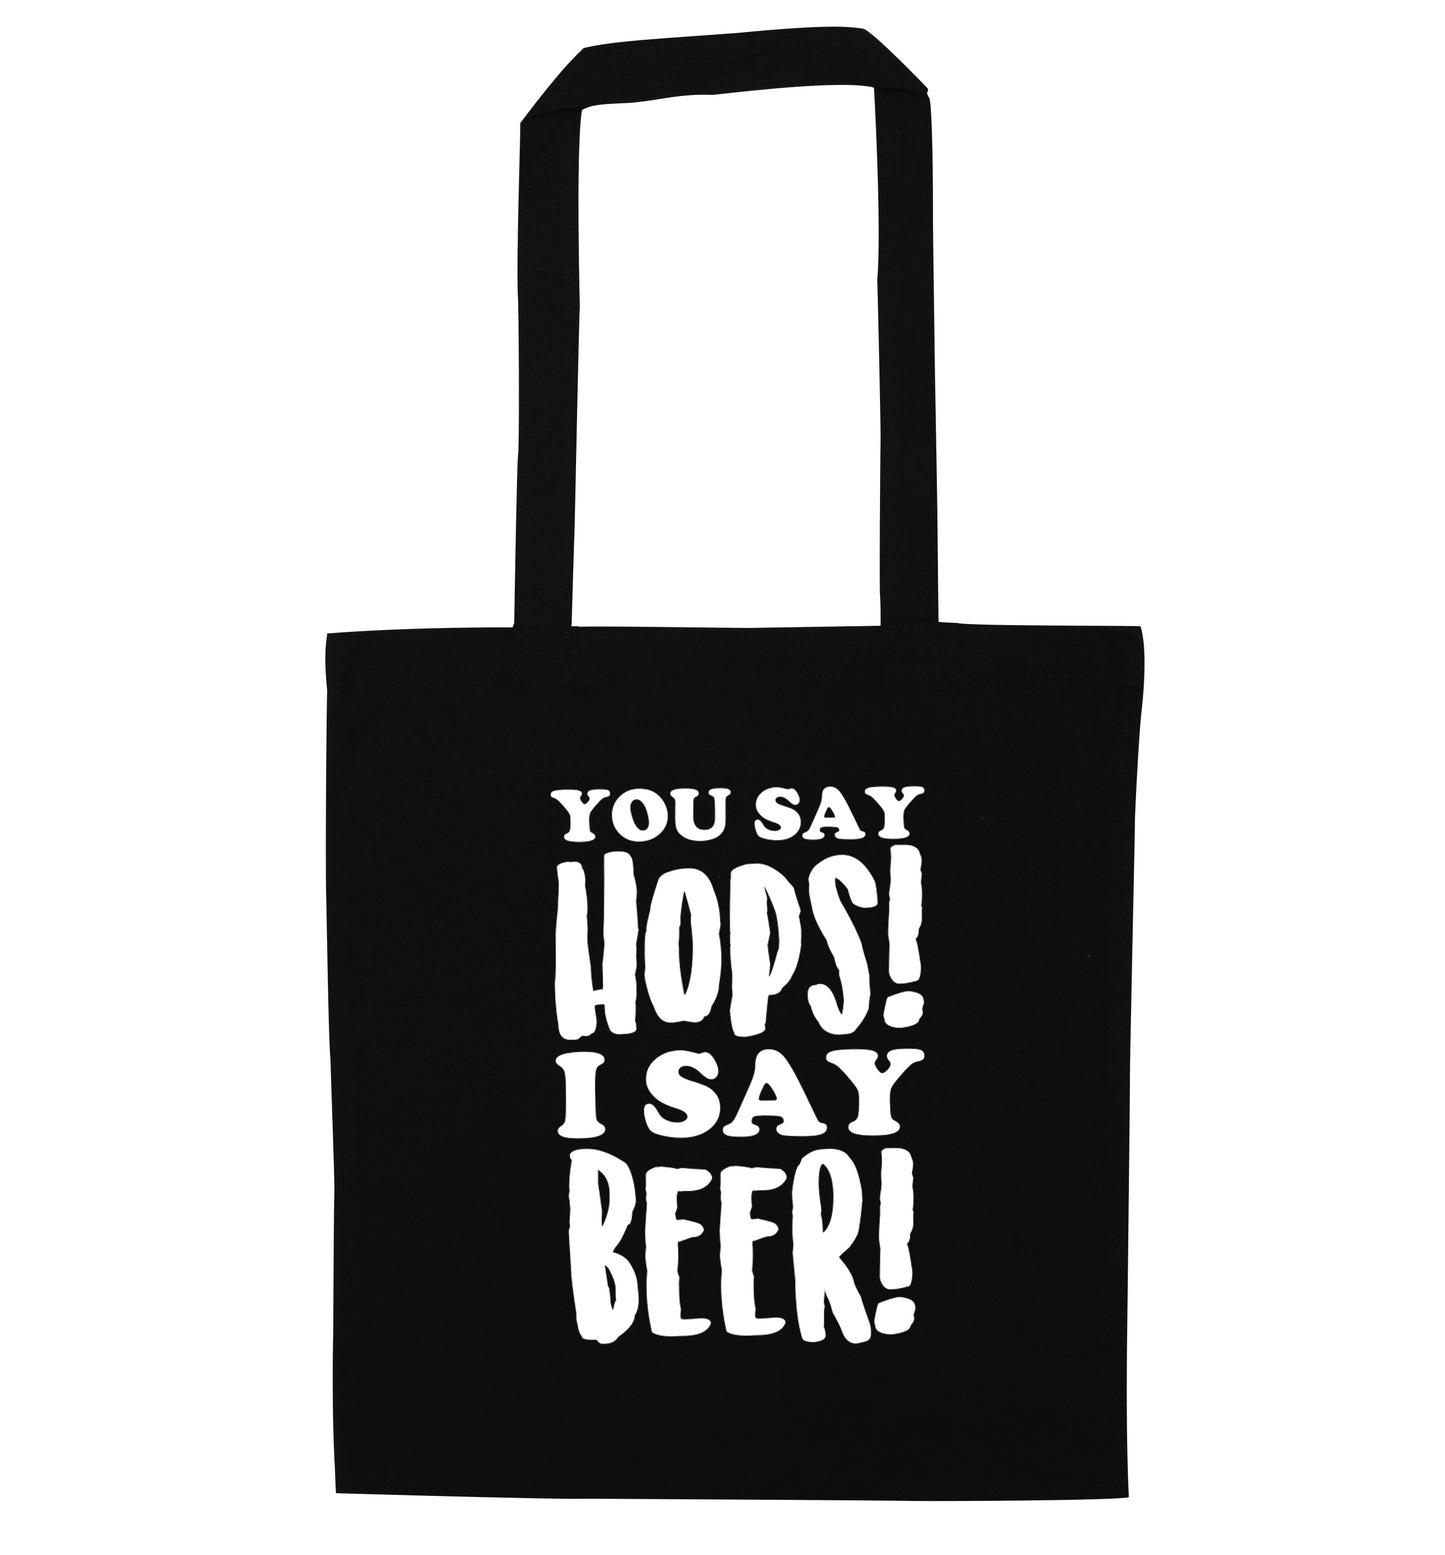 You say hops I say beer! black tote bag